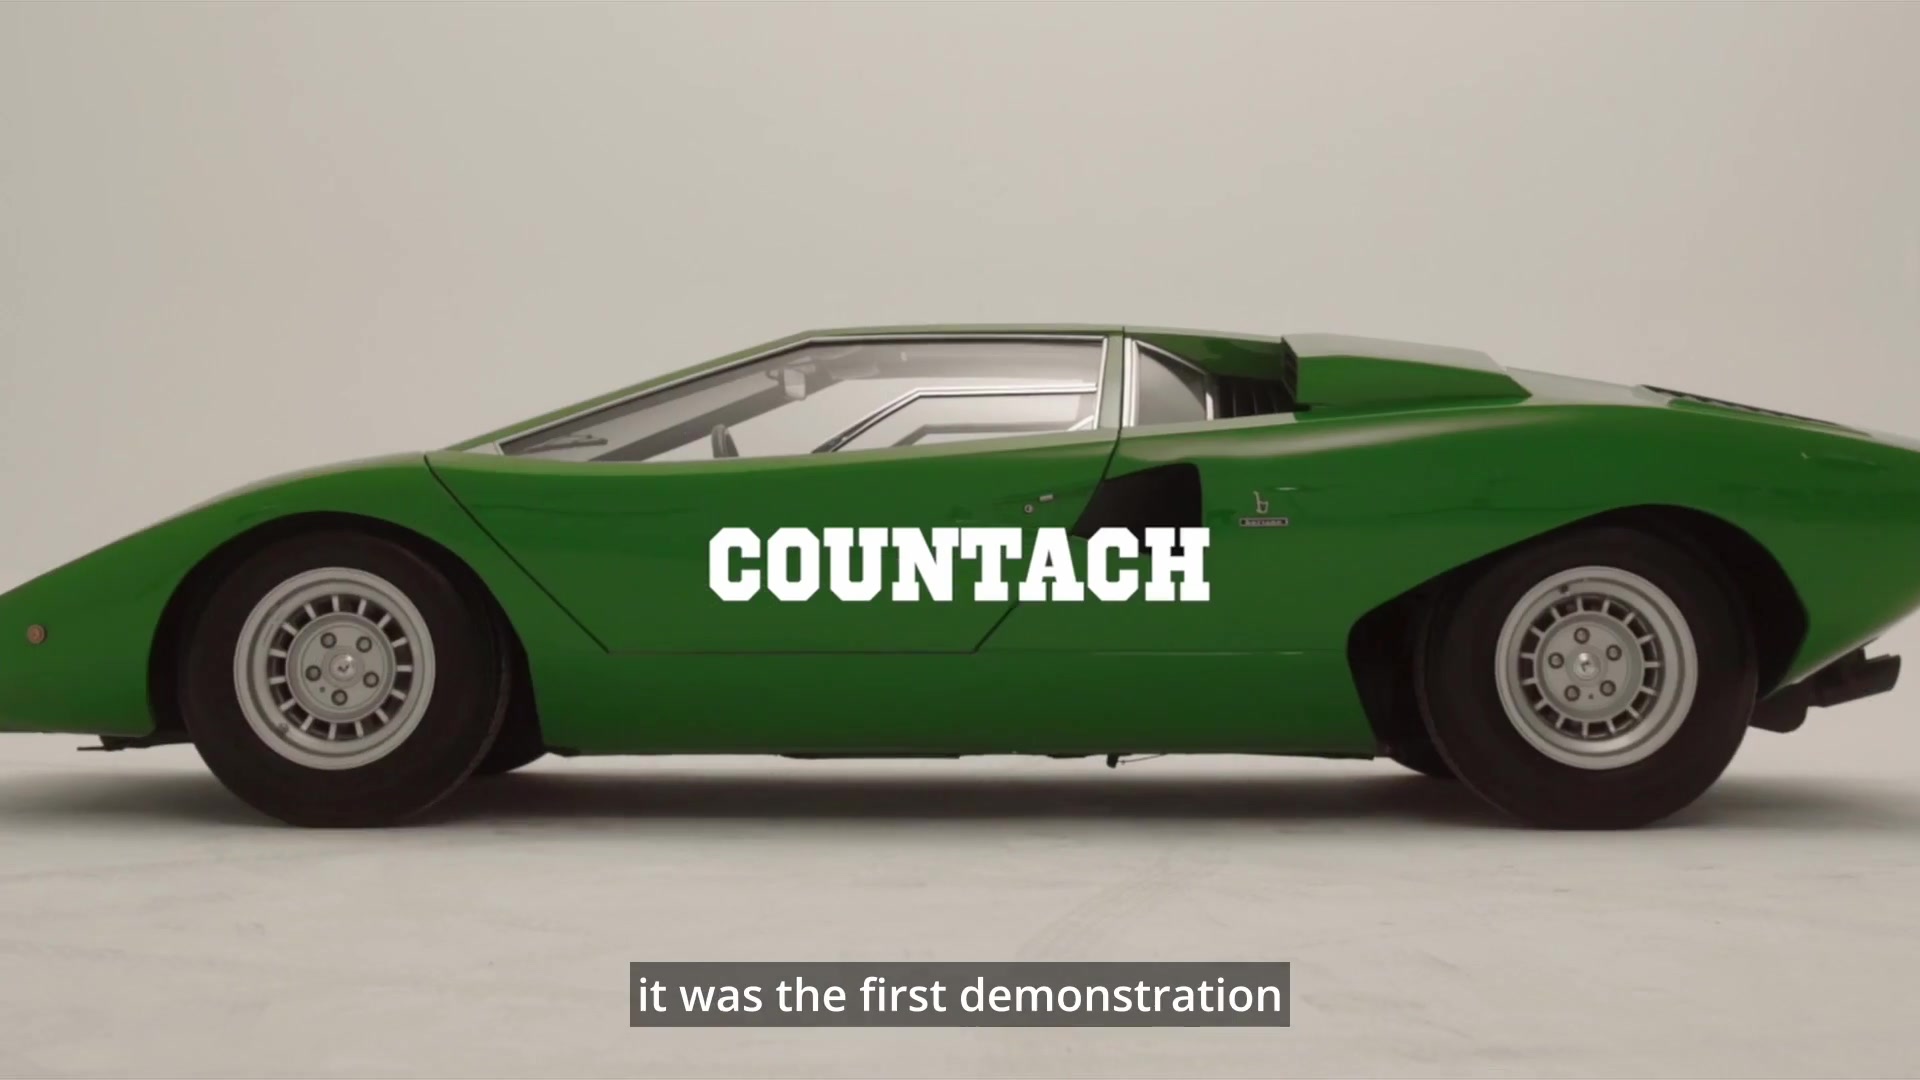 Lamborghini “The Icon Reborn” - an icon is born, not made